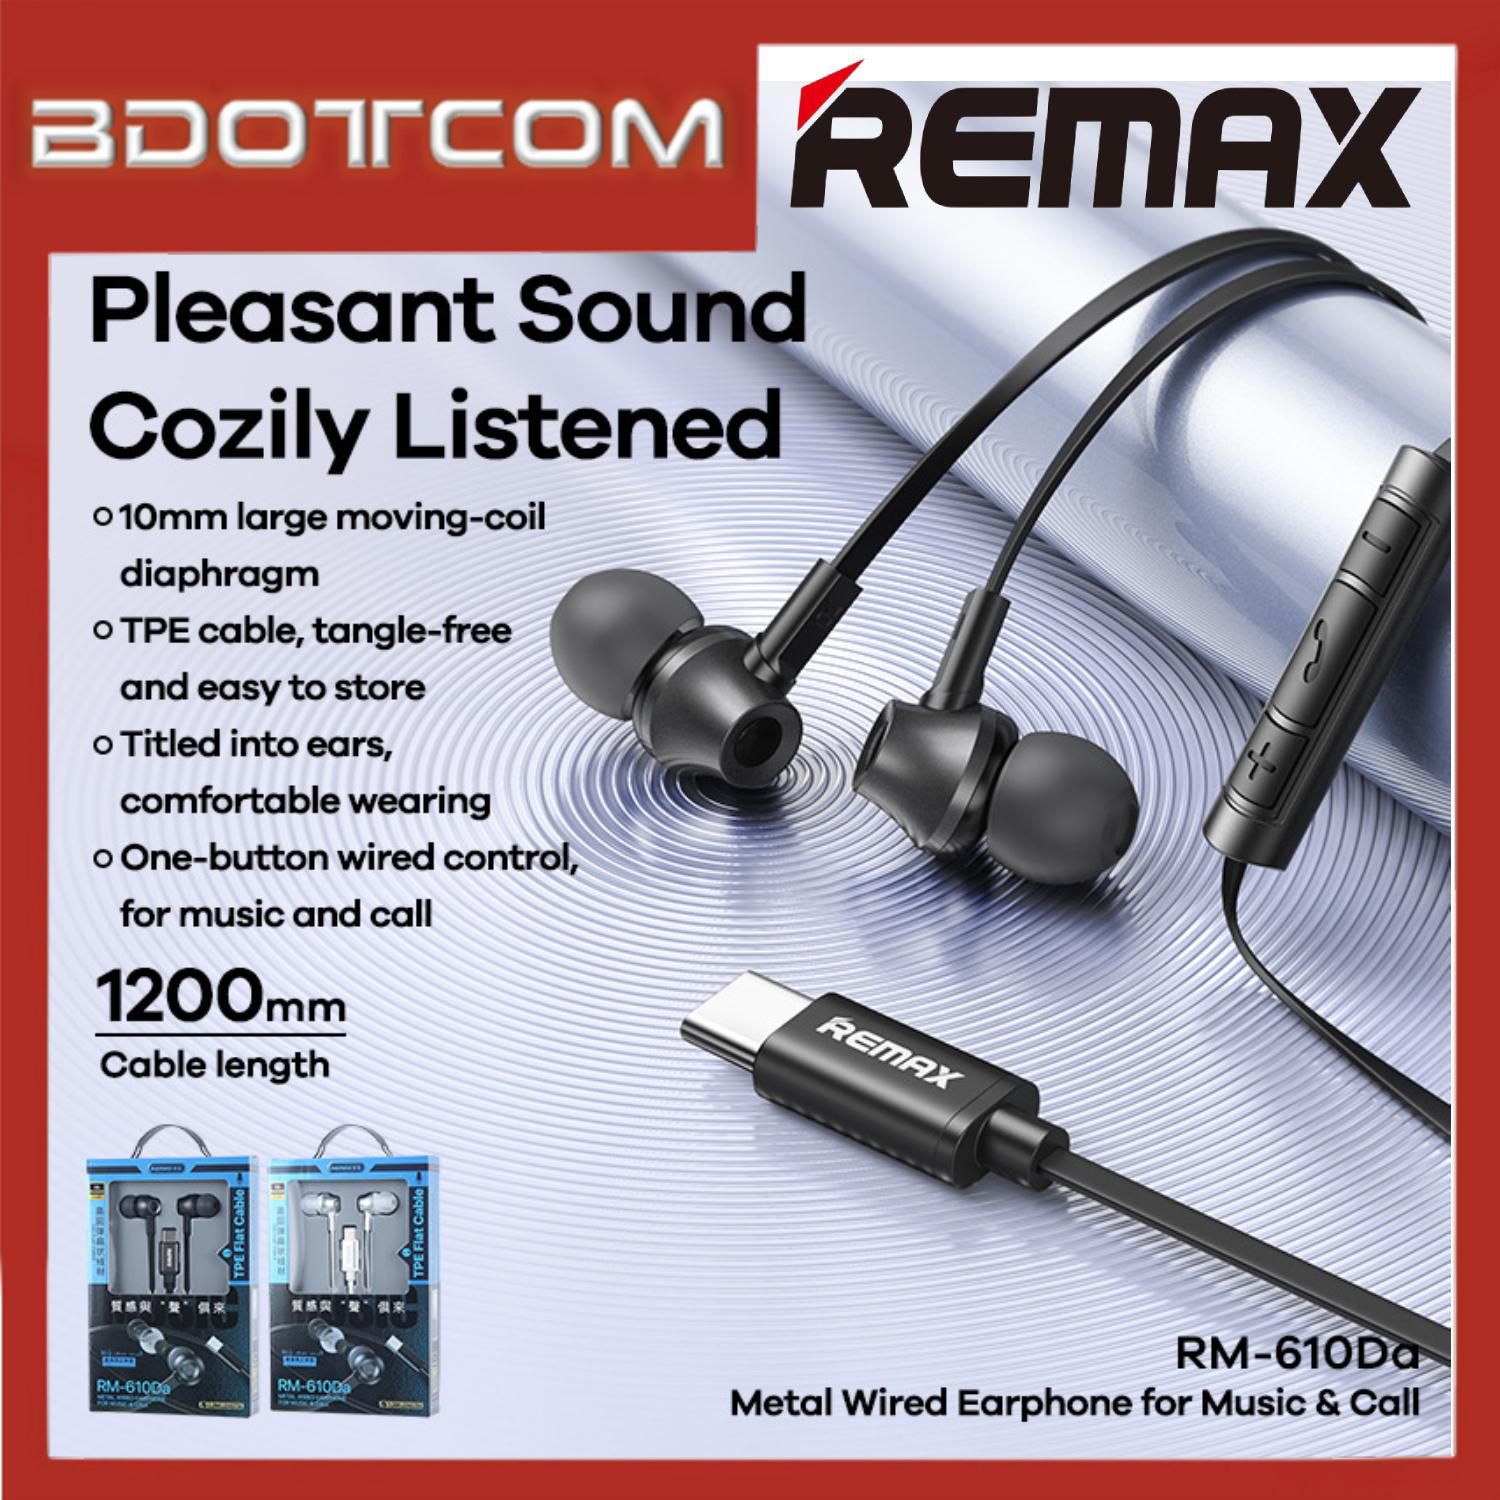 Remax RM-610Da Type-C Interface Stereo In-Ear Earphone Headphone